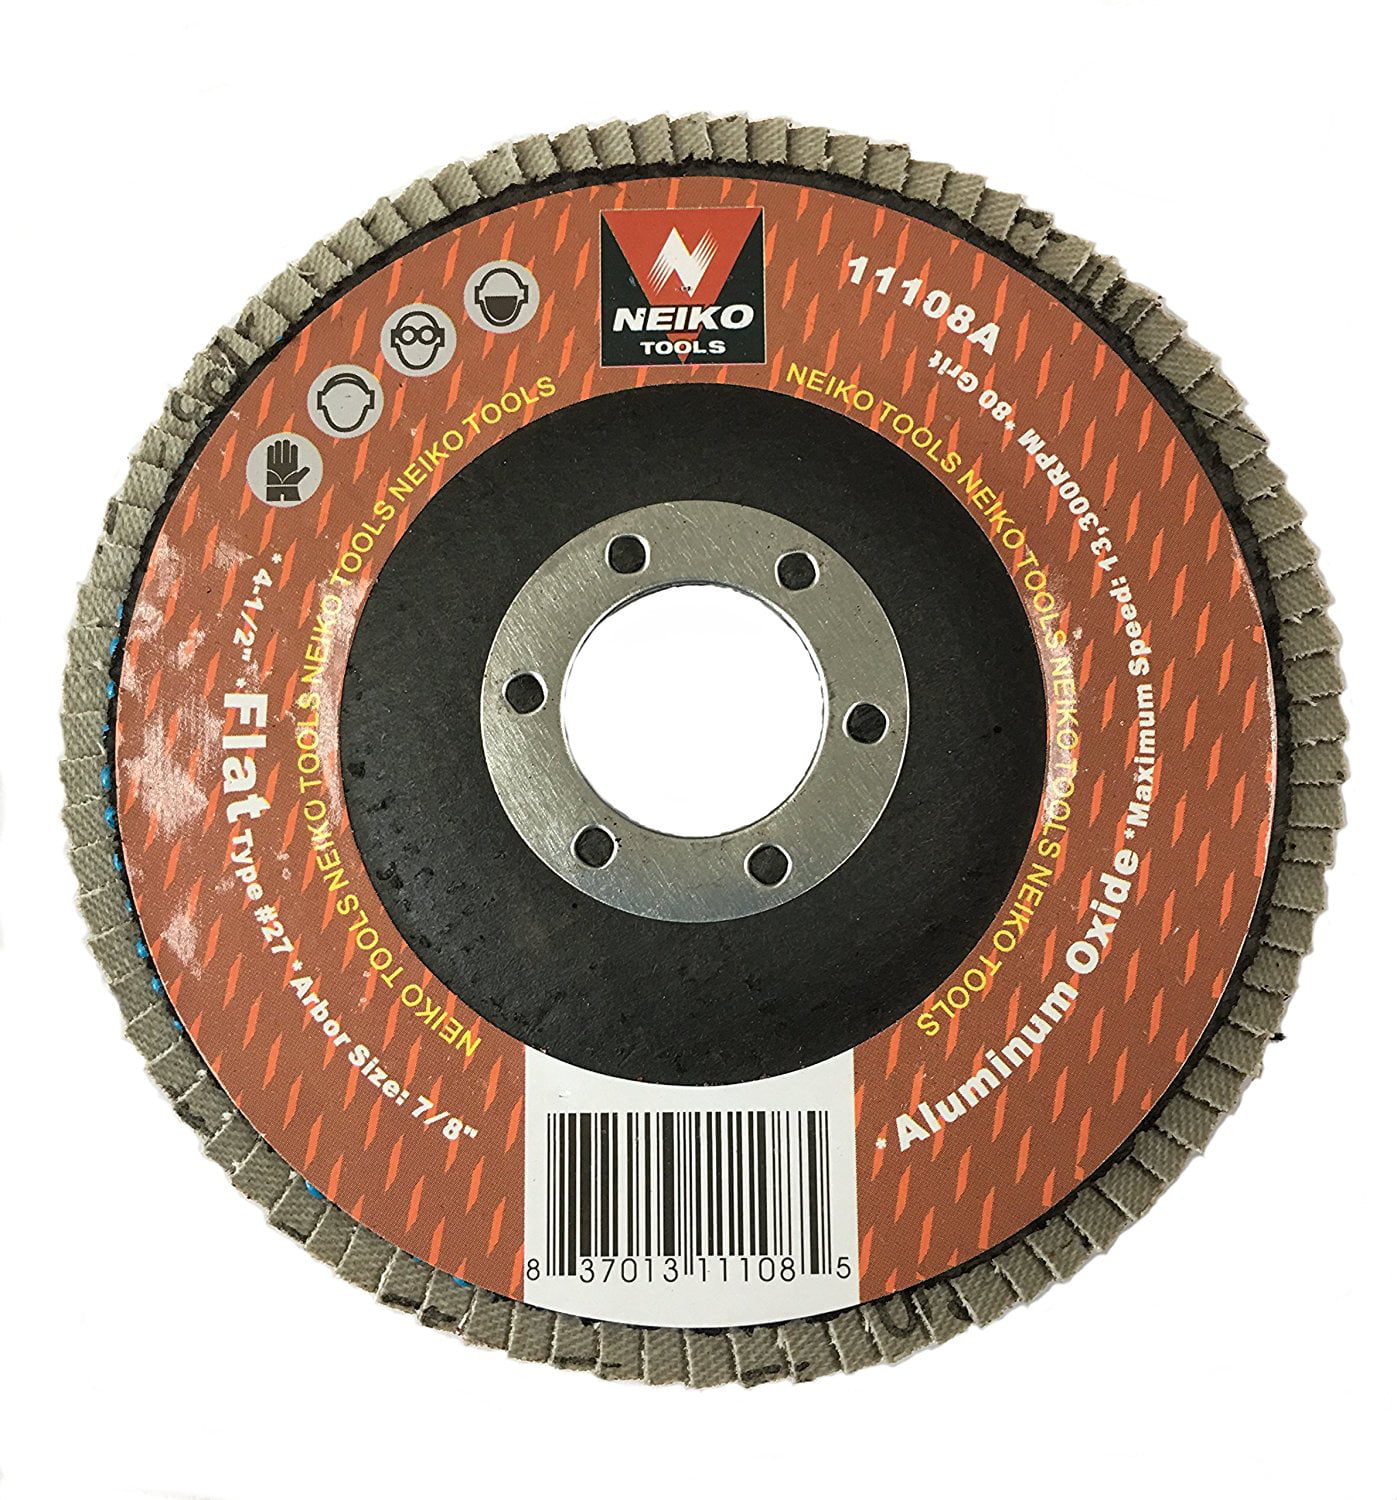 10 New 7" Neiko 80 Grit Sanding Flap Discs Flat Grinding & Sanding Wheels 